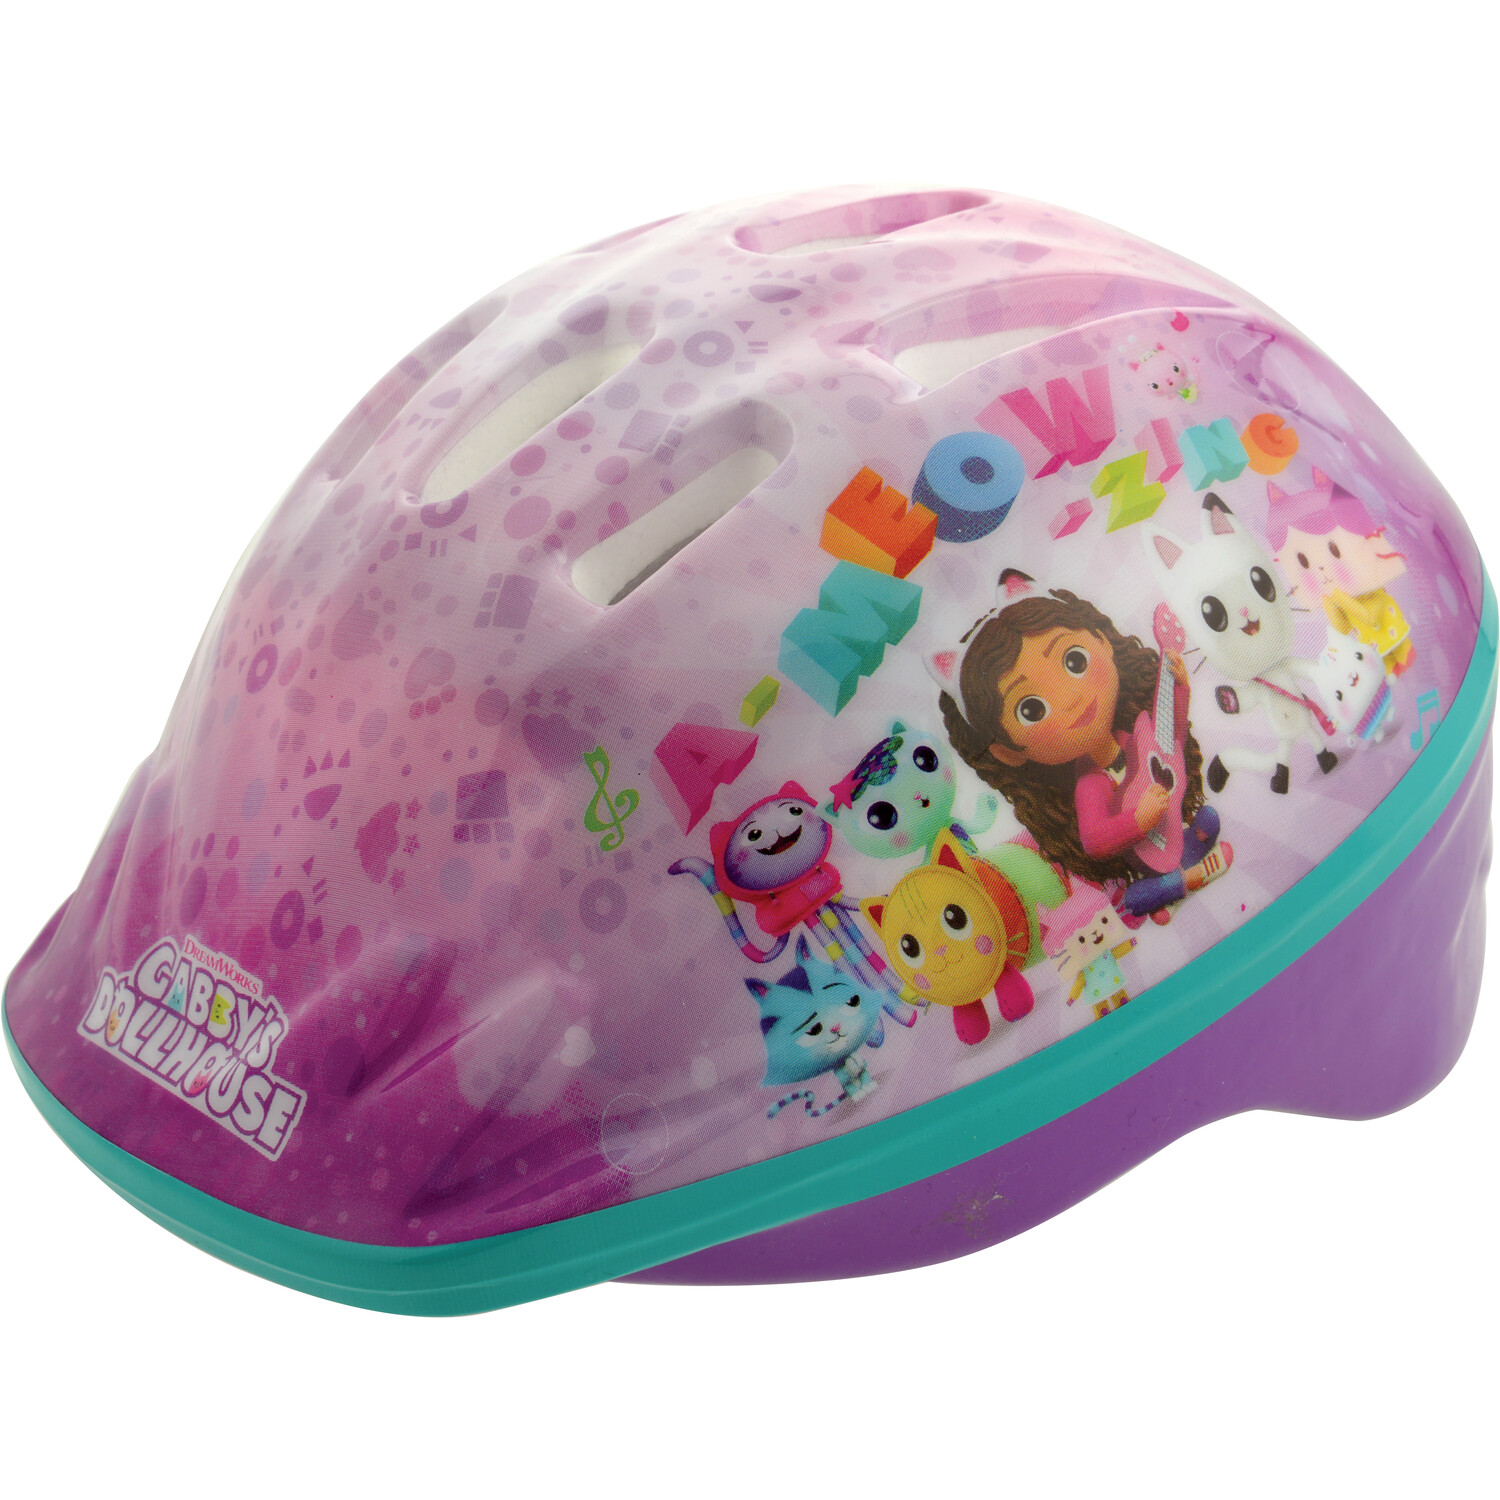 Gabby's Dollhouse Purple Safety Helmet Image 2